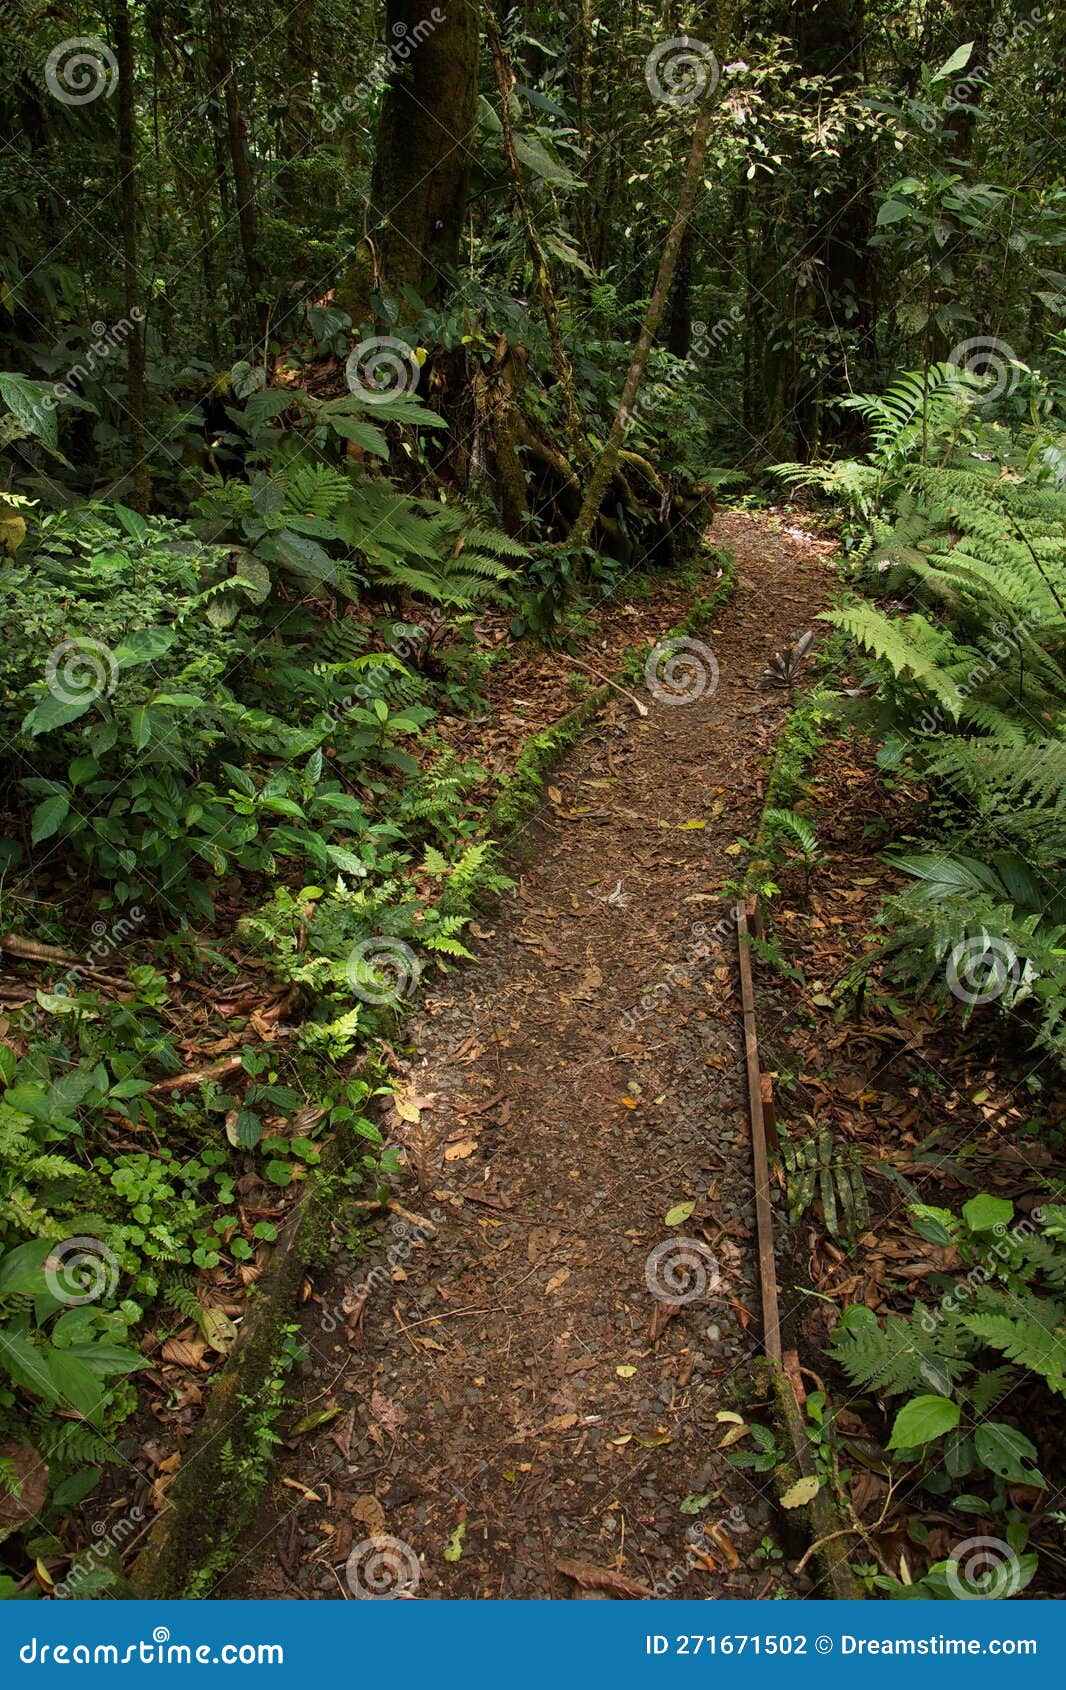 hiking track in bosque nuboso national park near santa elena in costa rica